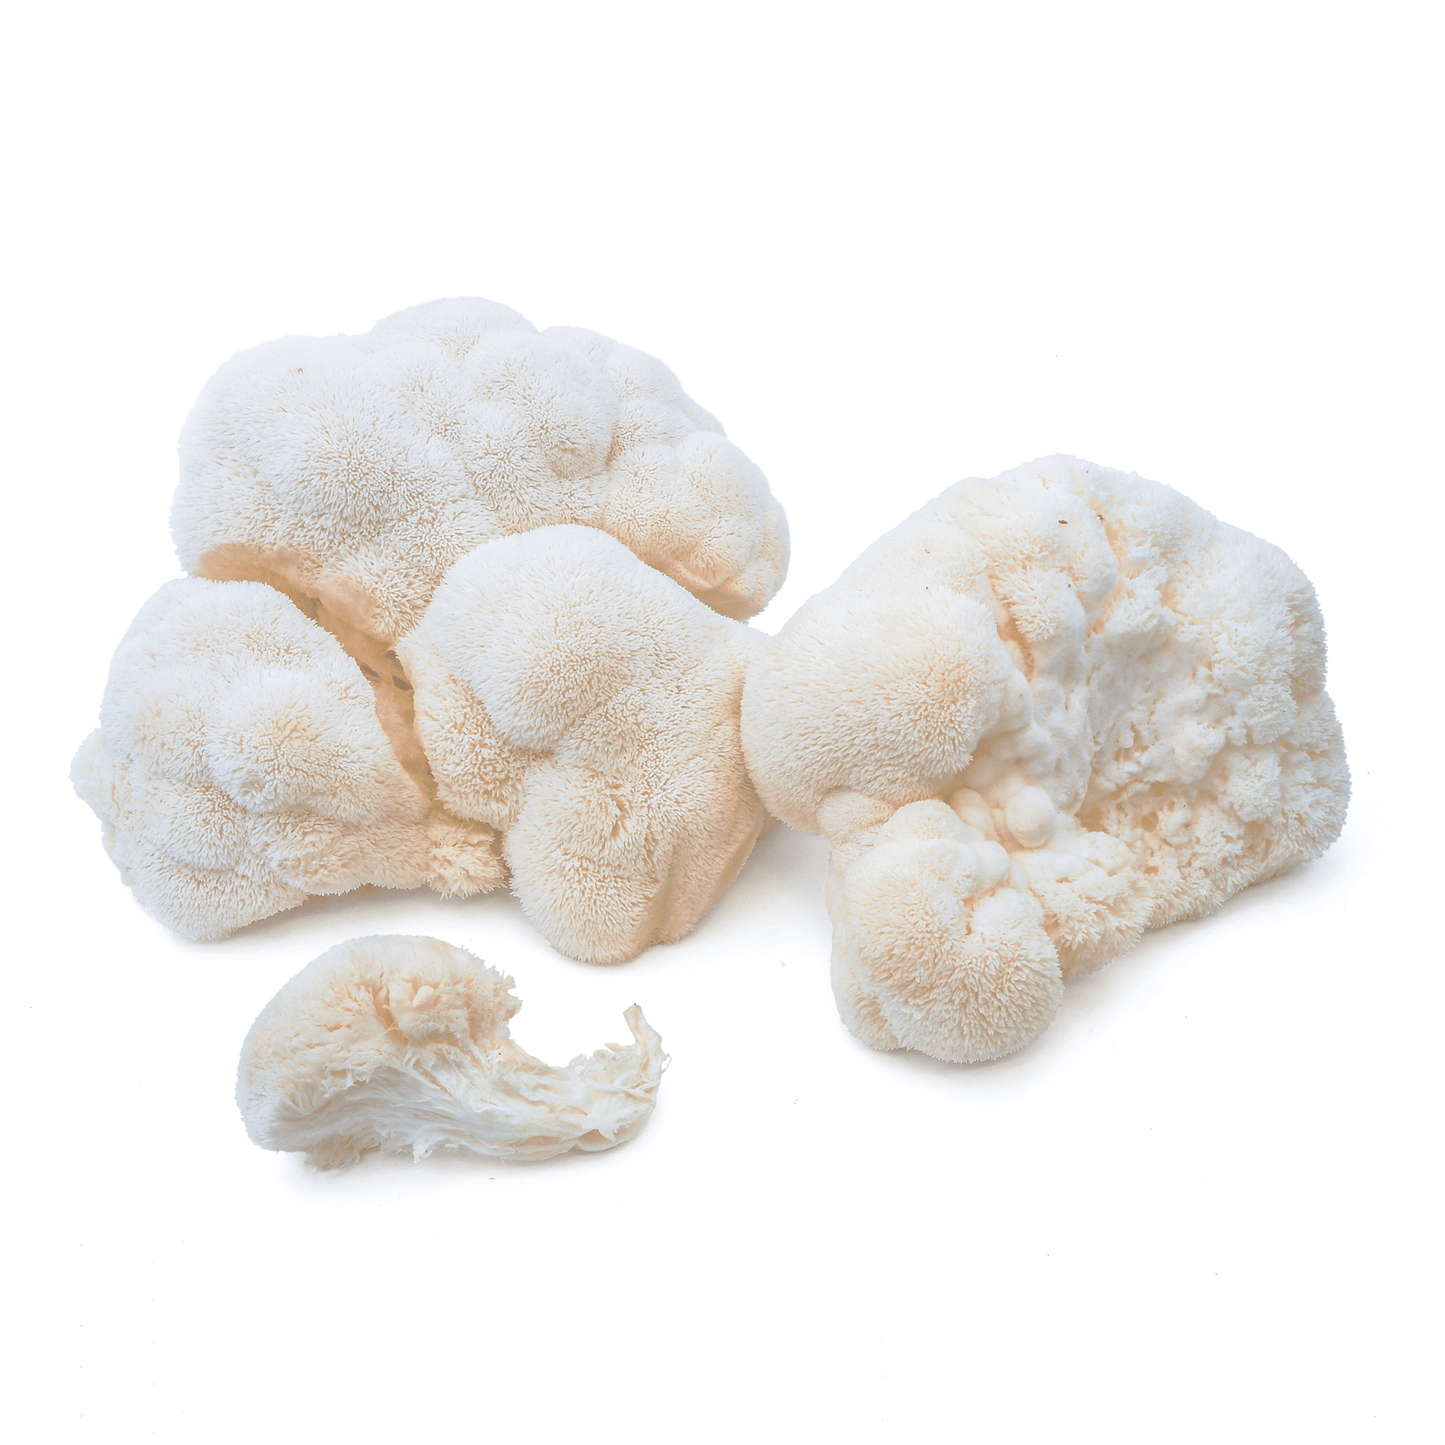 Lion's Mane Mushrooms (100g)